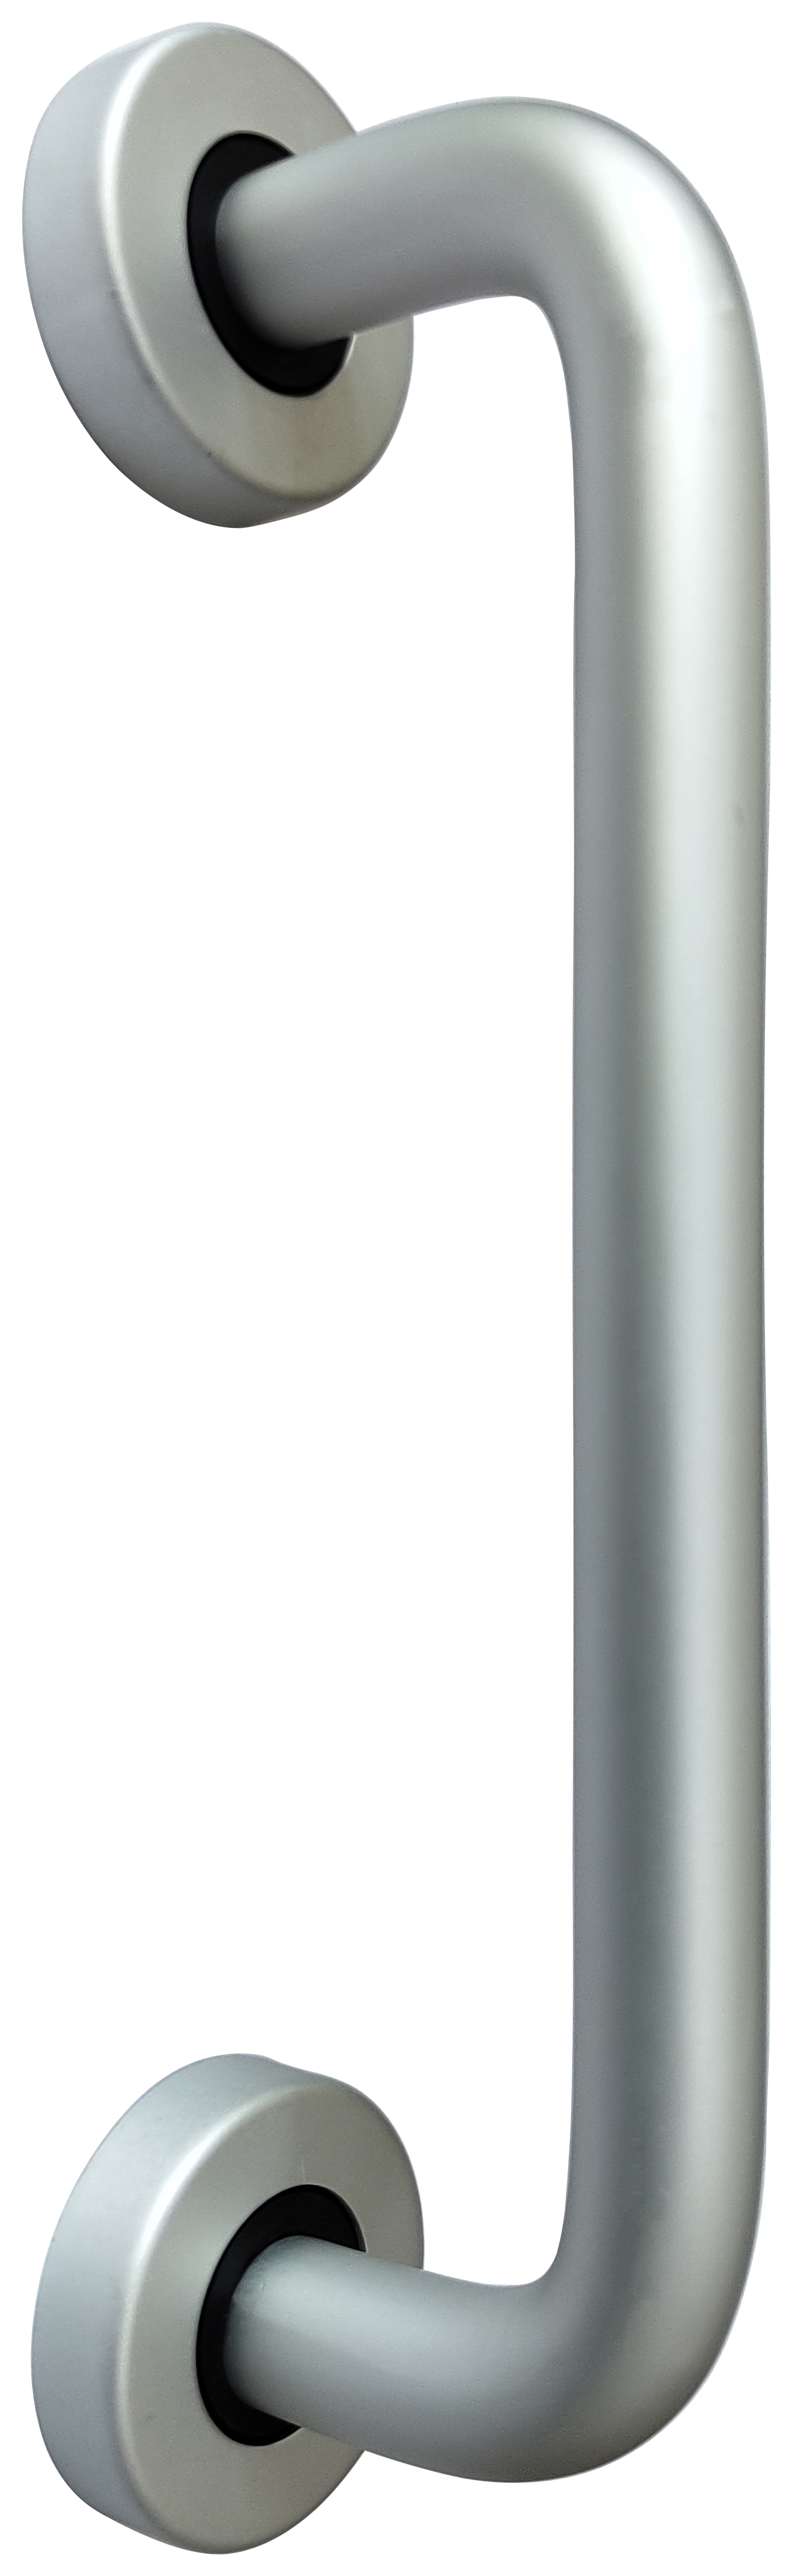 Image of Wickes D Pull Single Door Handle - Aluminium 225mm